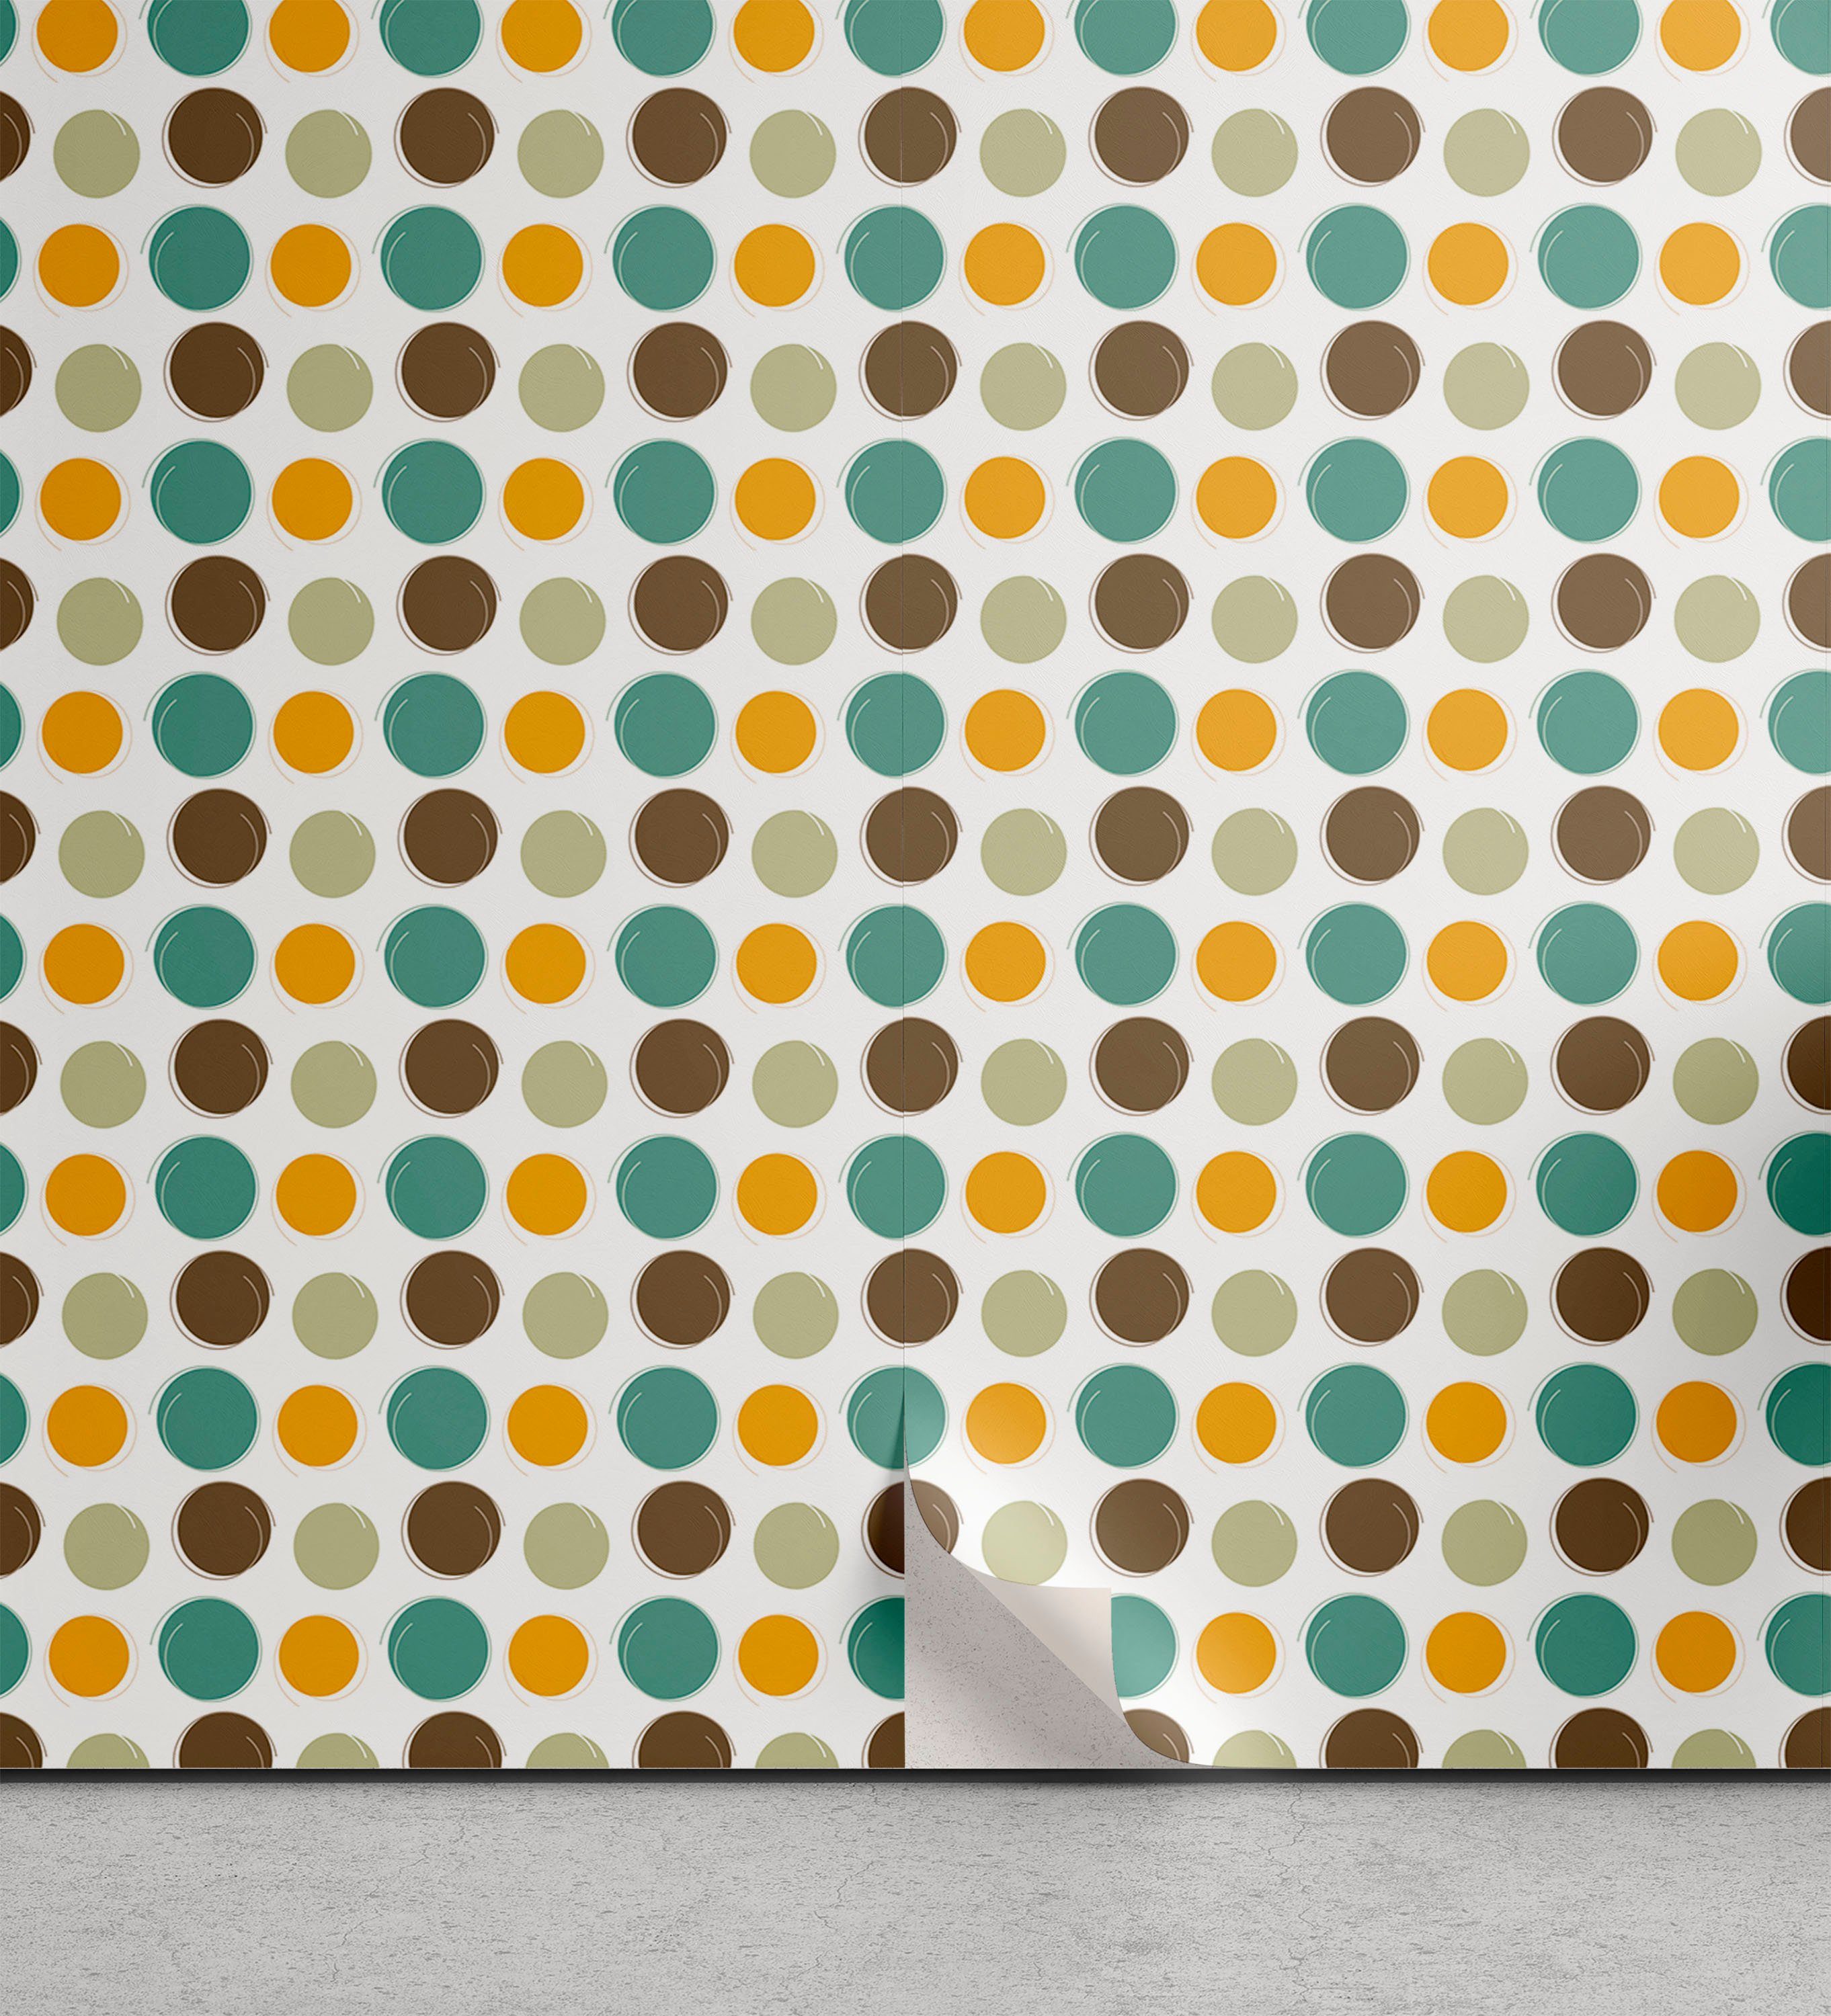 Abakuhaus Vinyltapete selbstklebendes Wohnzimmer Küchenakzent, Retro Bunter abstrakter Punkt